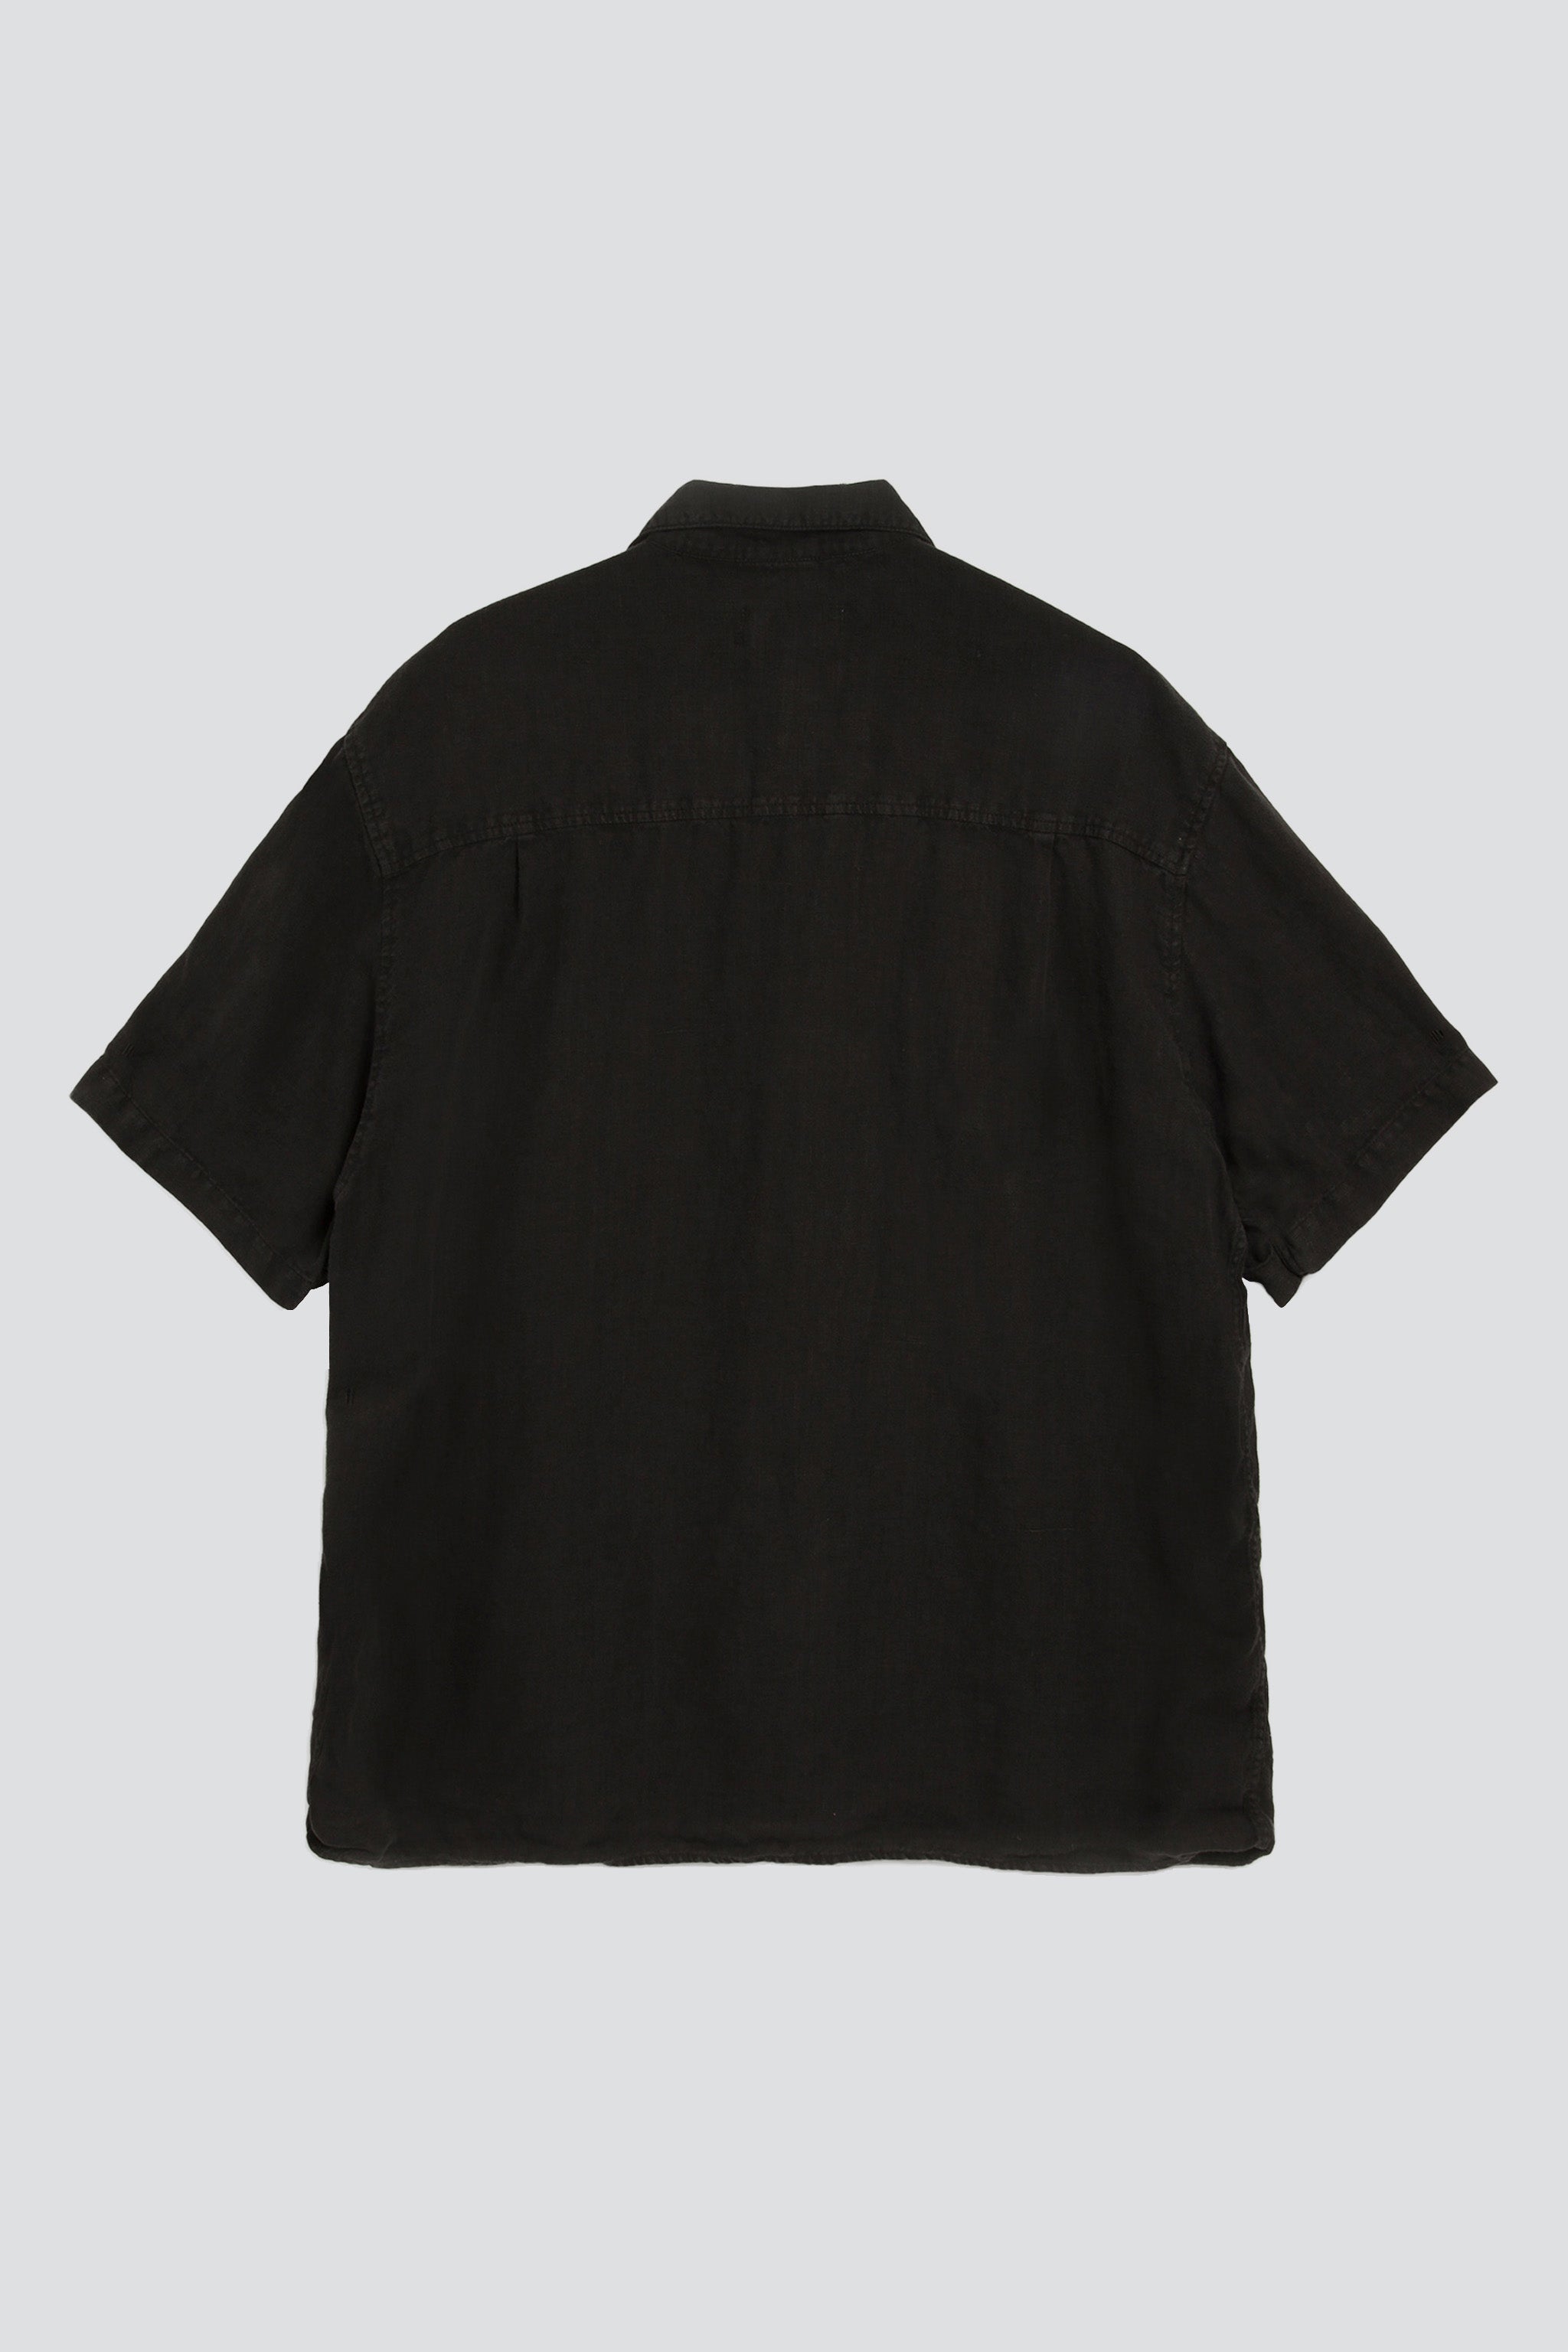 Black Wray Shirt